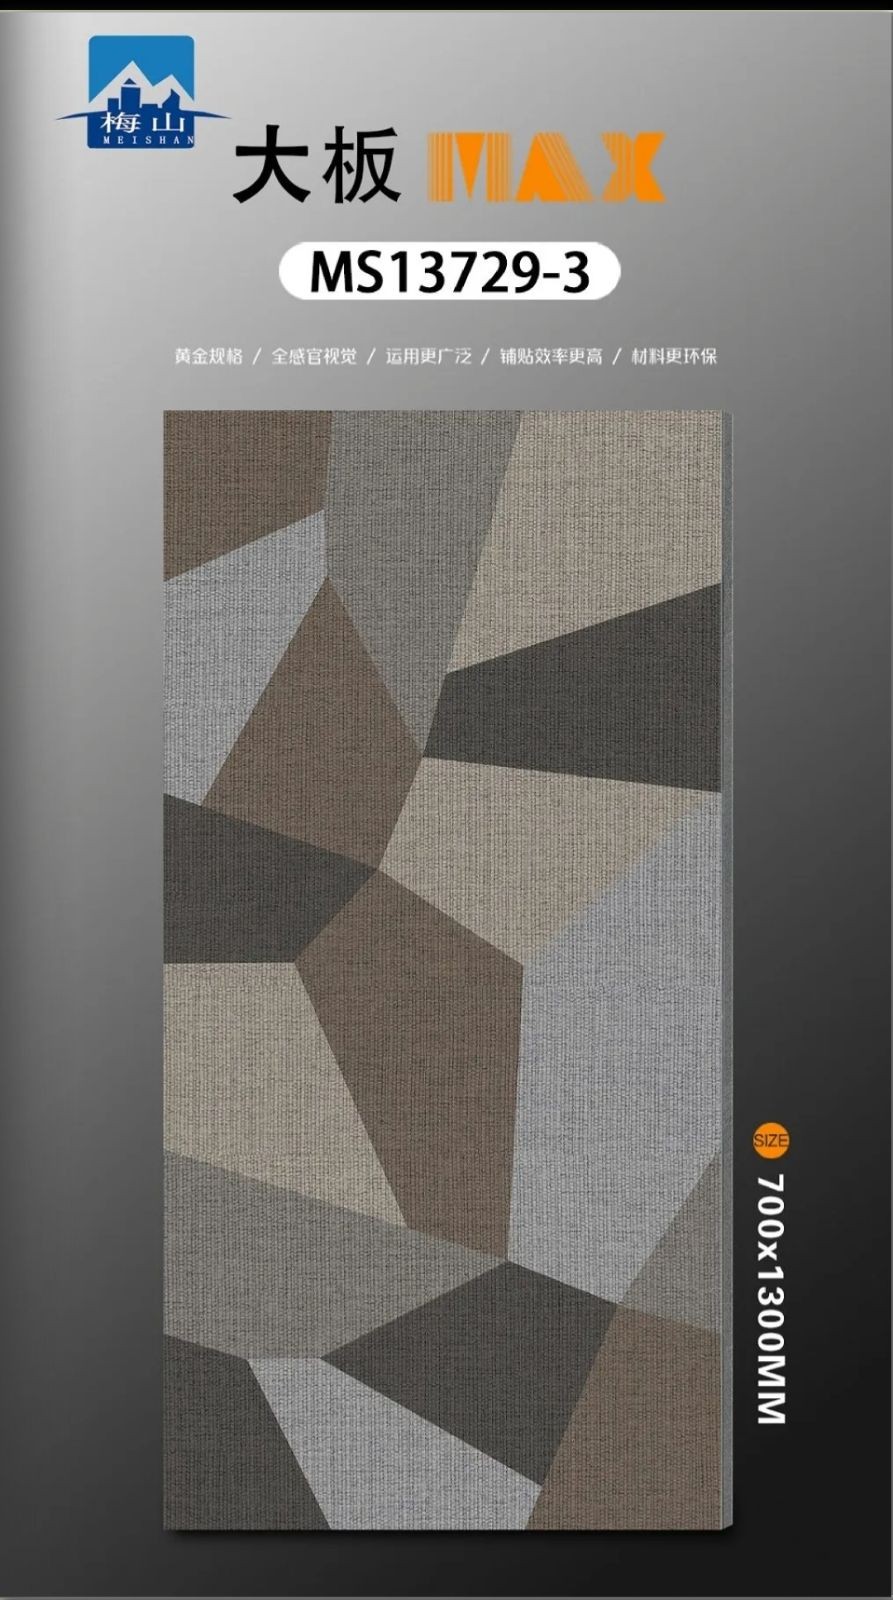 COTV全球直播-中国广东·佛山市梅山陶瓷有限公司专业生产销售“梅山”系列瓷质地毯砖等产品，欢迎大家光临！